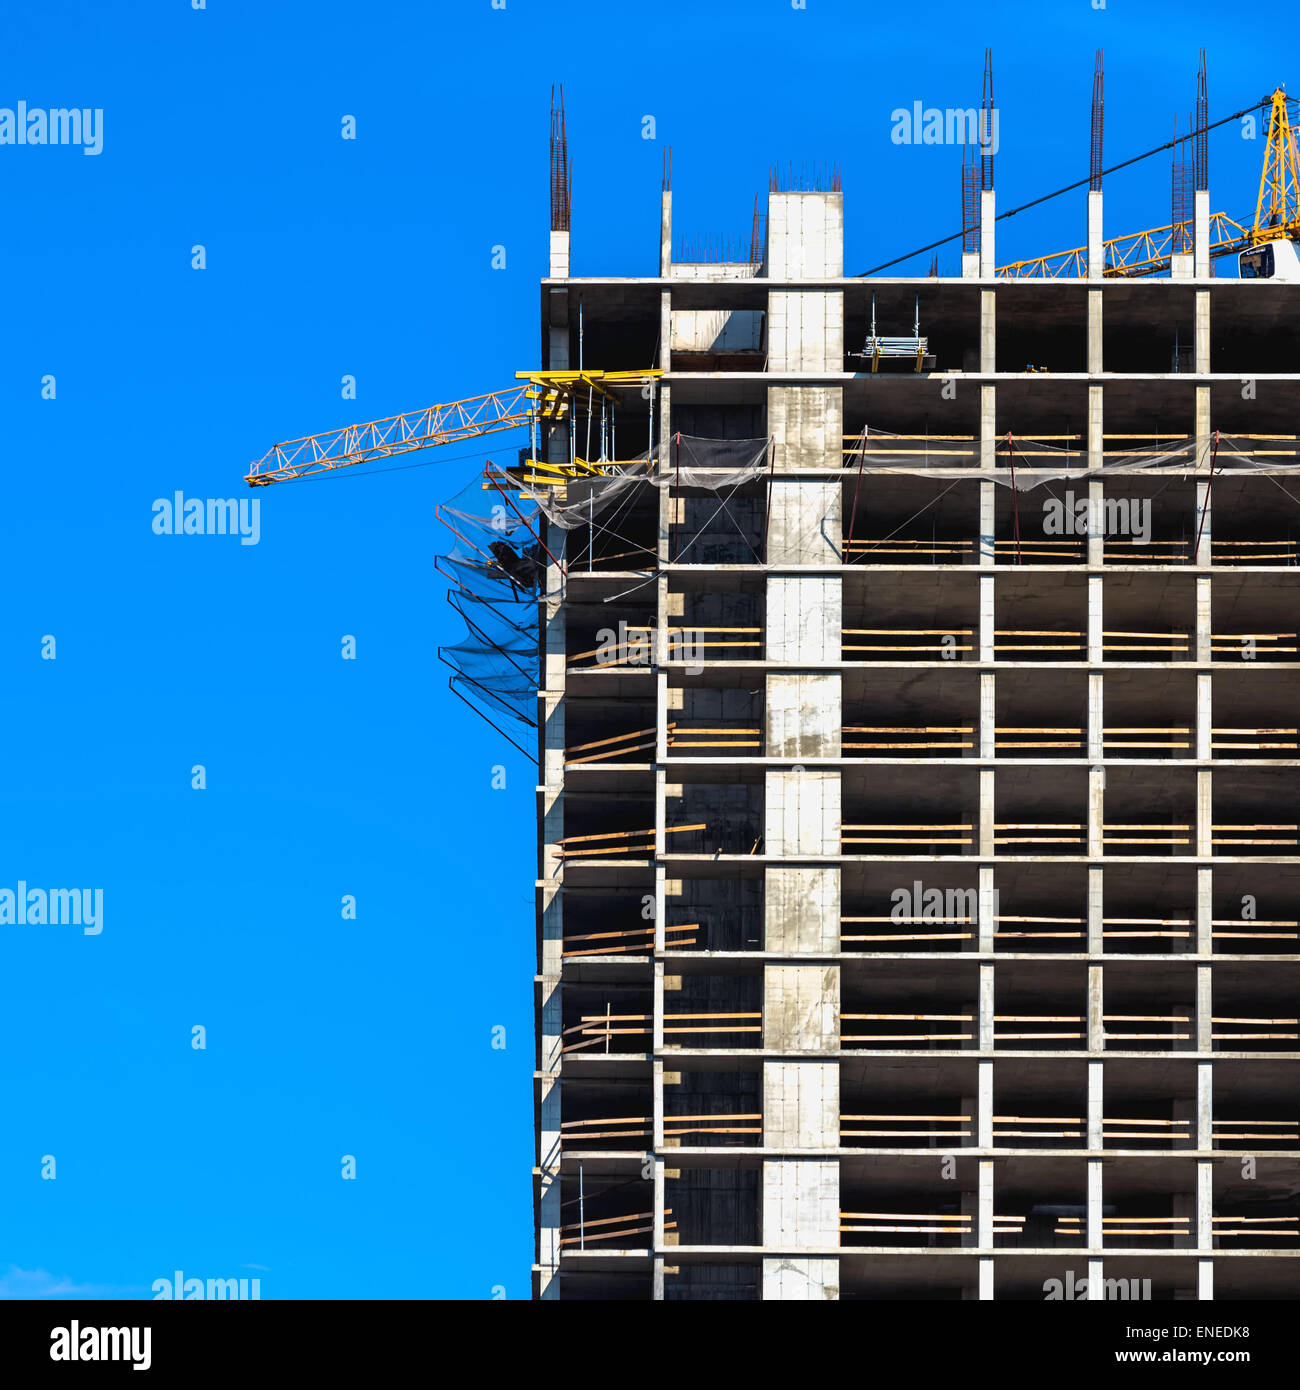 Building construction on blue sky background Stock Photo